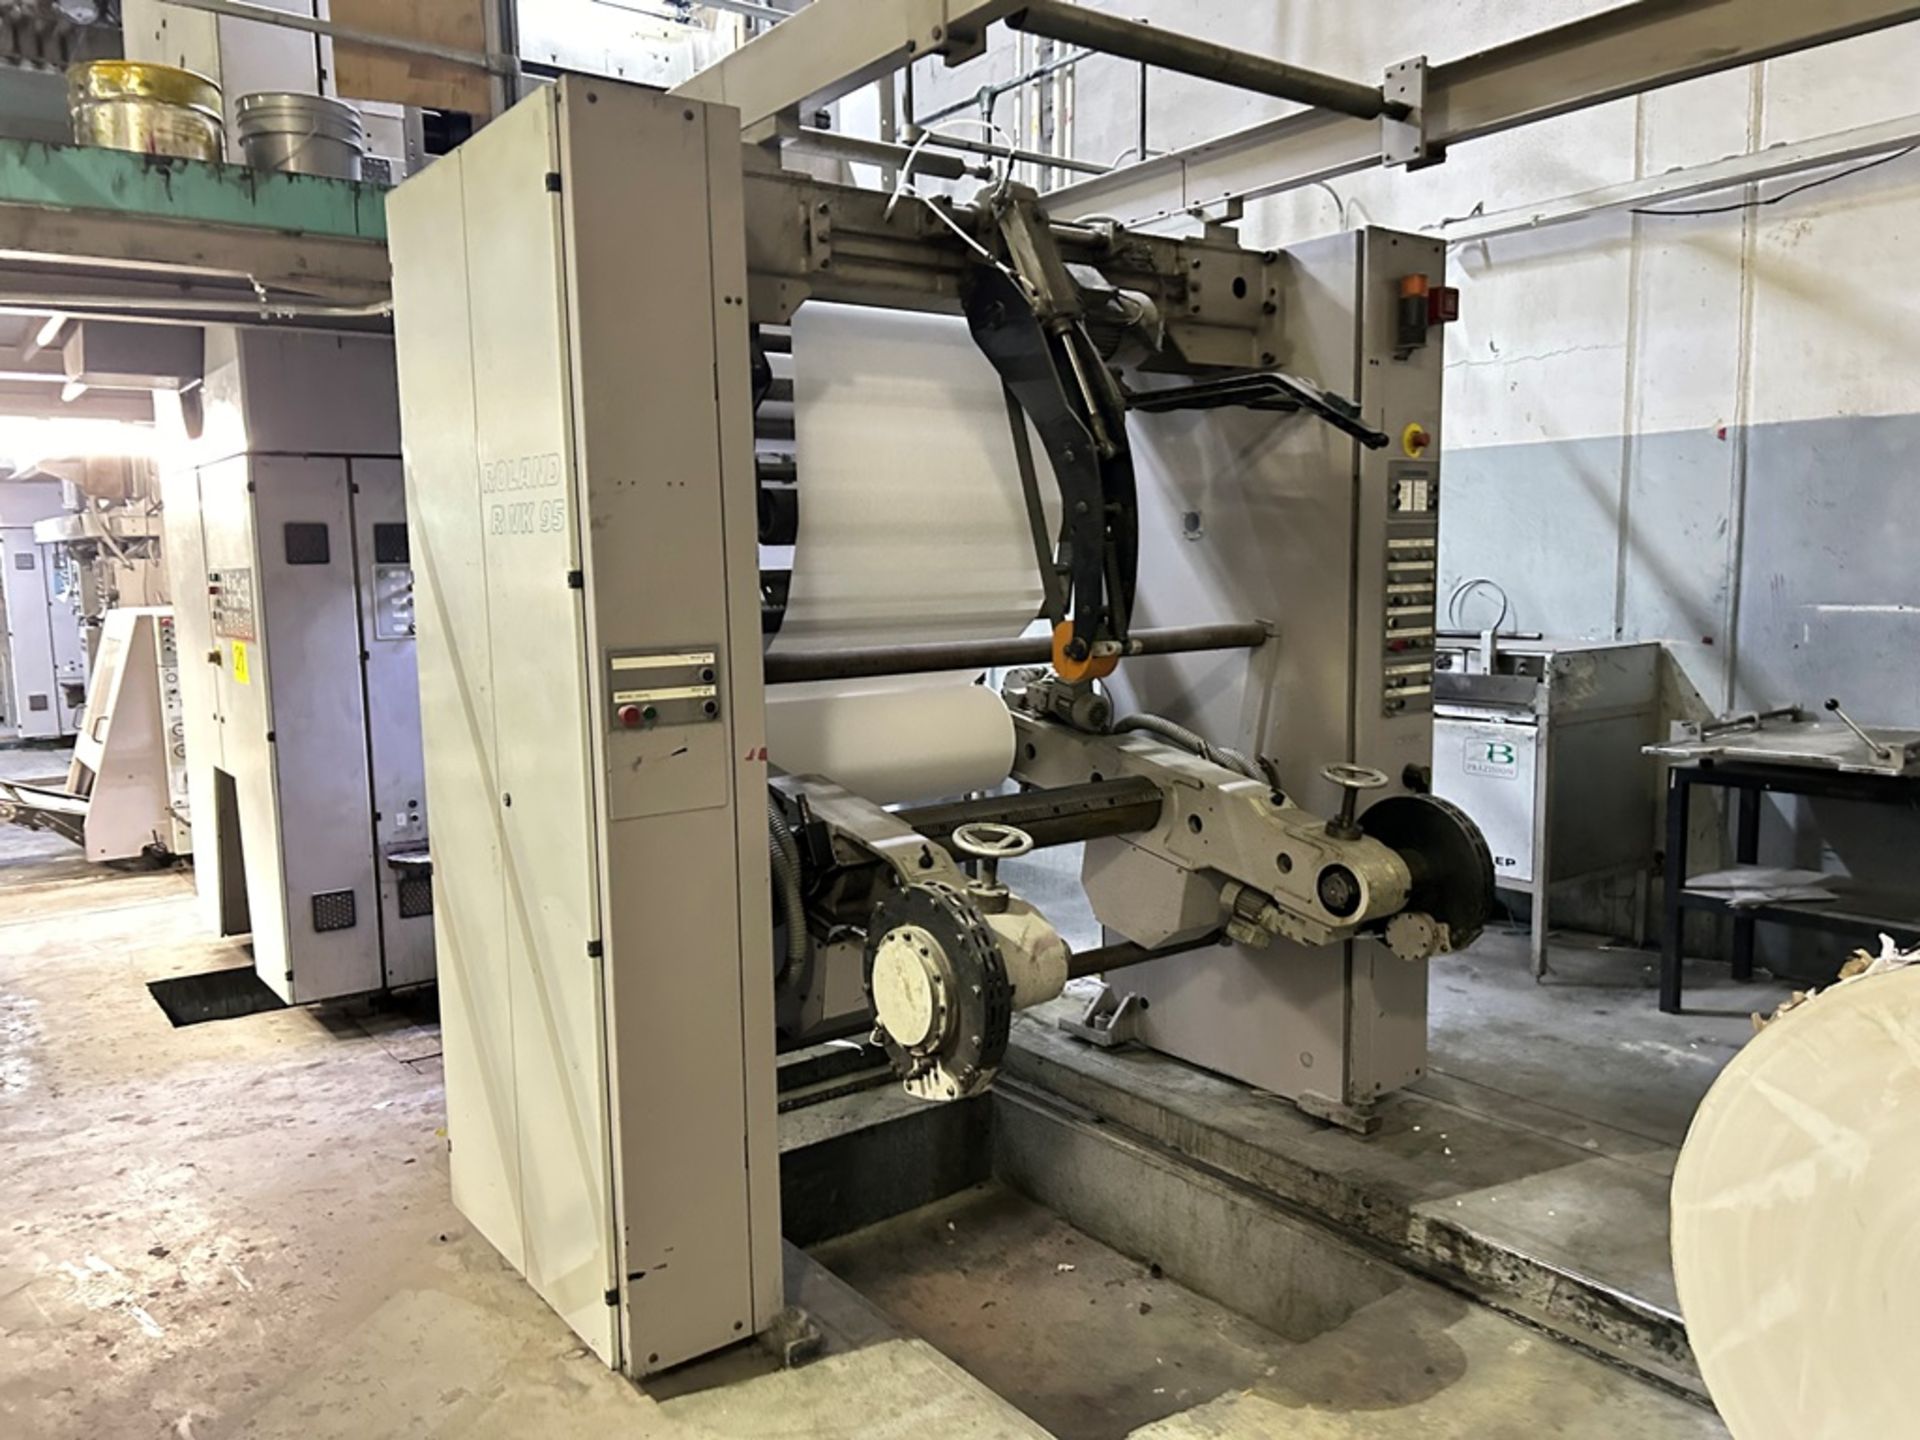 MAN ROLAND rotary printing machine, Model UNISET 60, Serial No. 11191, Year 2000, 400V, consisting - Image 4 of 37